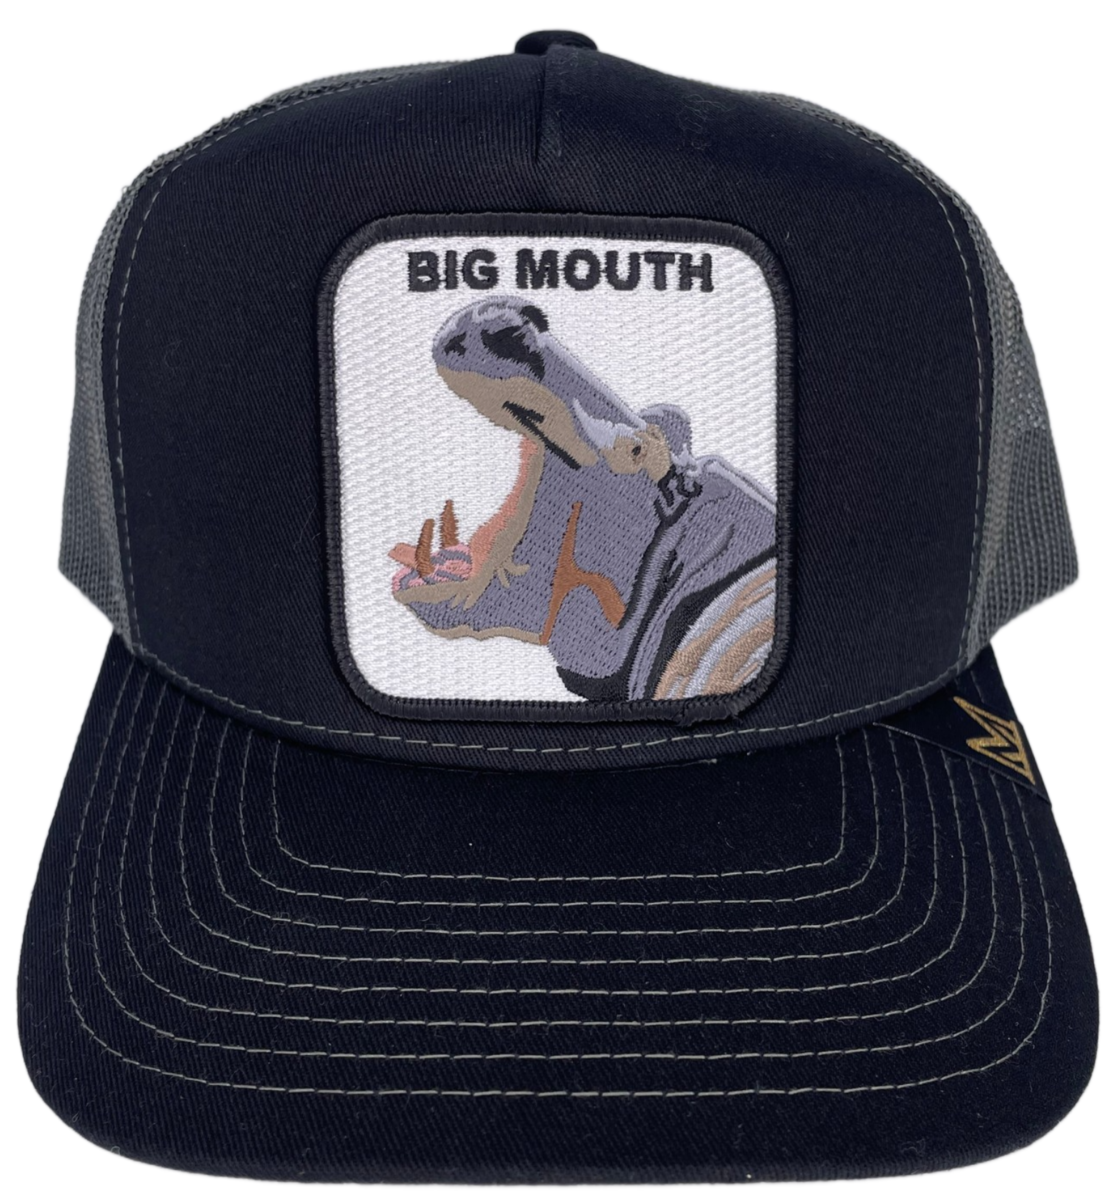 Big Mouth - Black